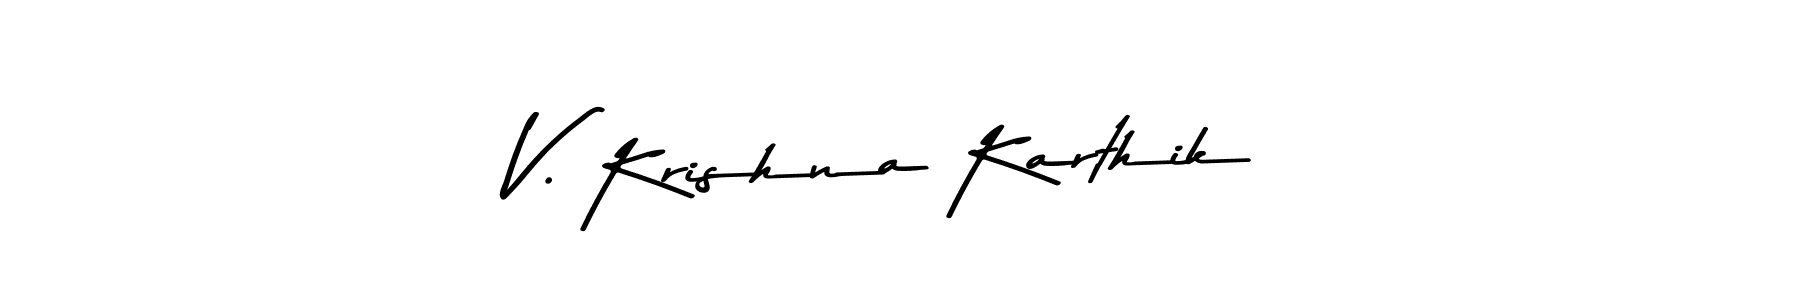 How to Draw V. Krishna Karthik signature style? Asem Kandis PERSONAL USE is a latest design signature styles for name V. Krishna Karthik. V. Krishna Karthik signature style 9 images and pictures png